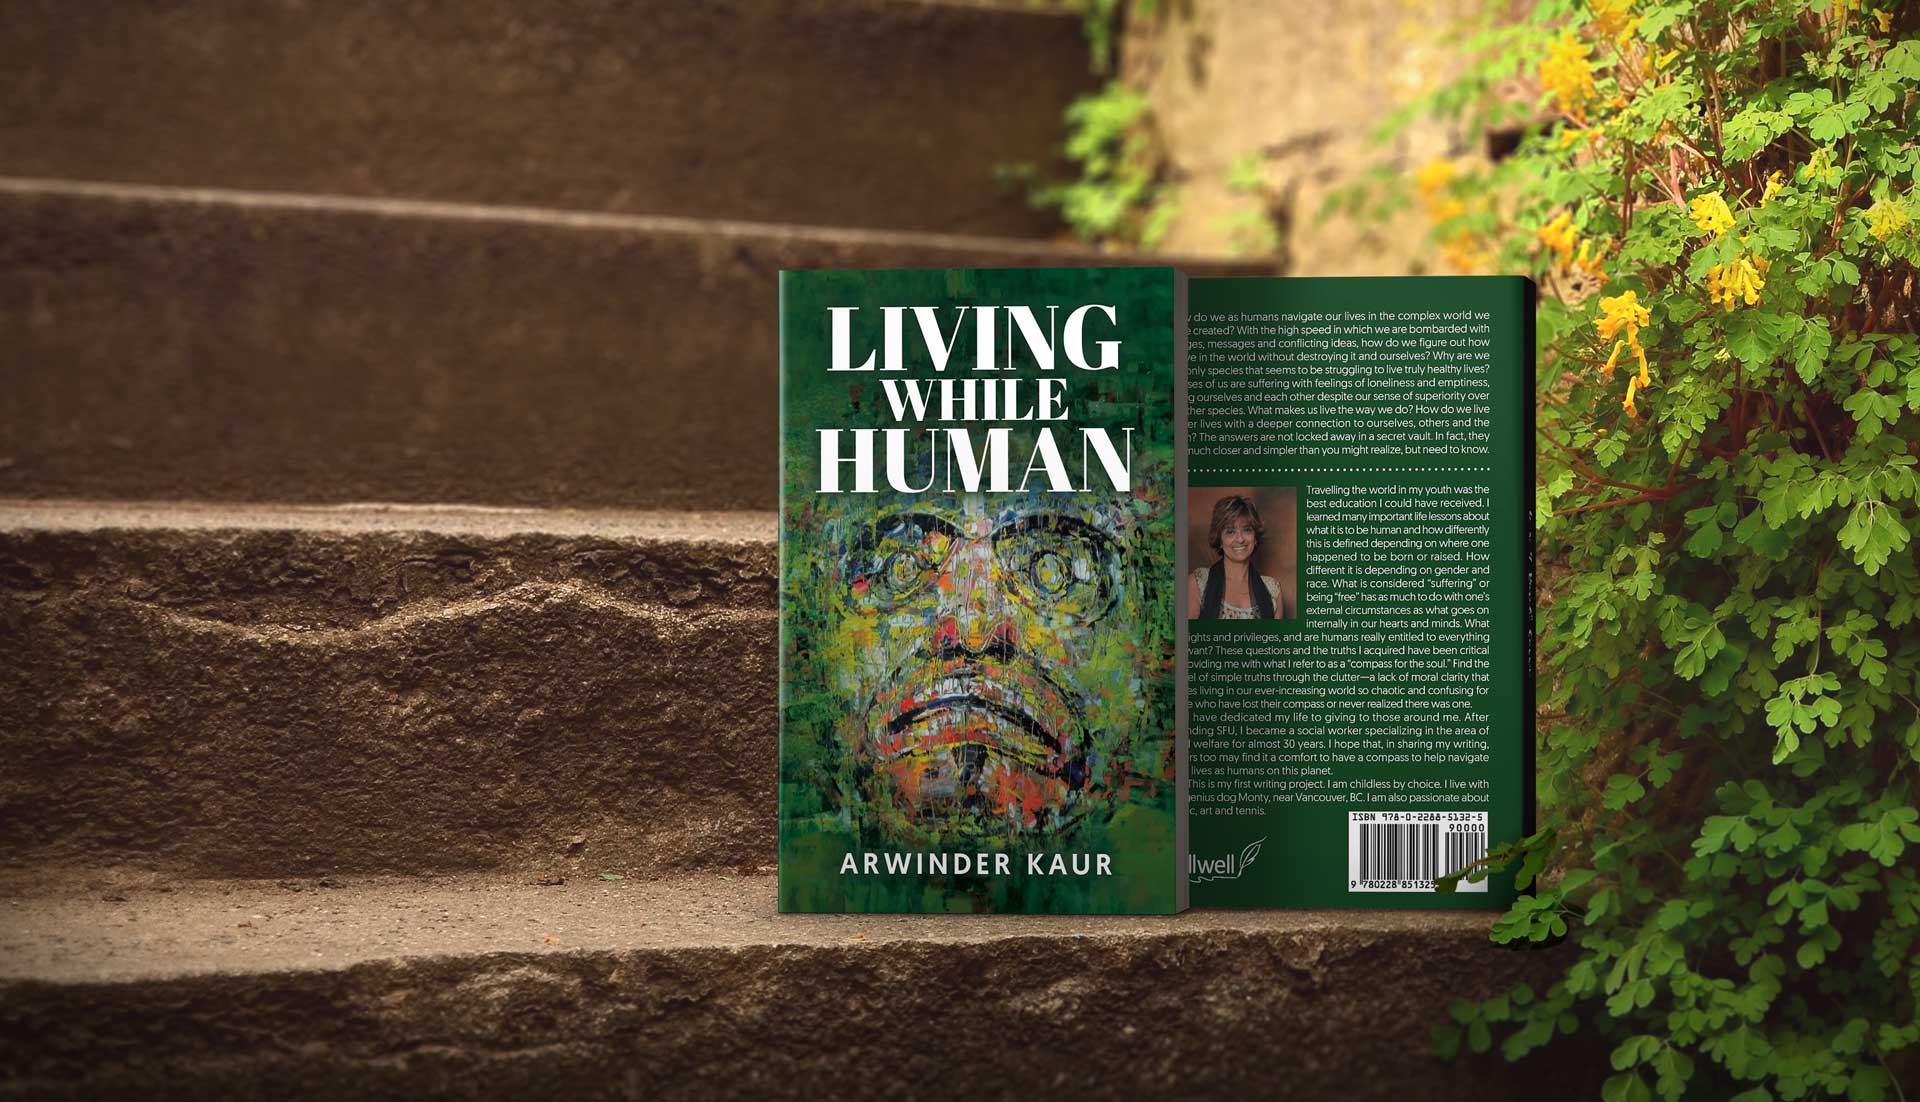 Living While Human by Arwinder Kaur